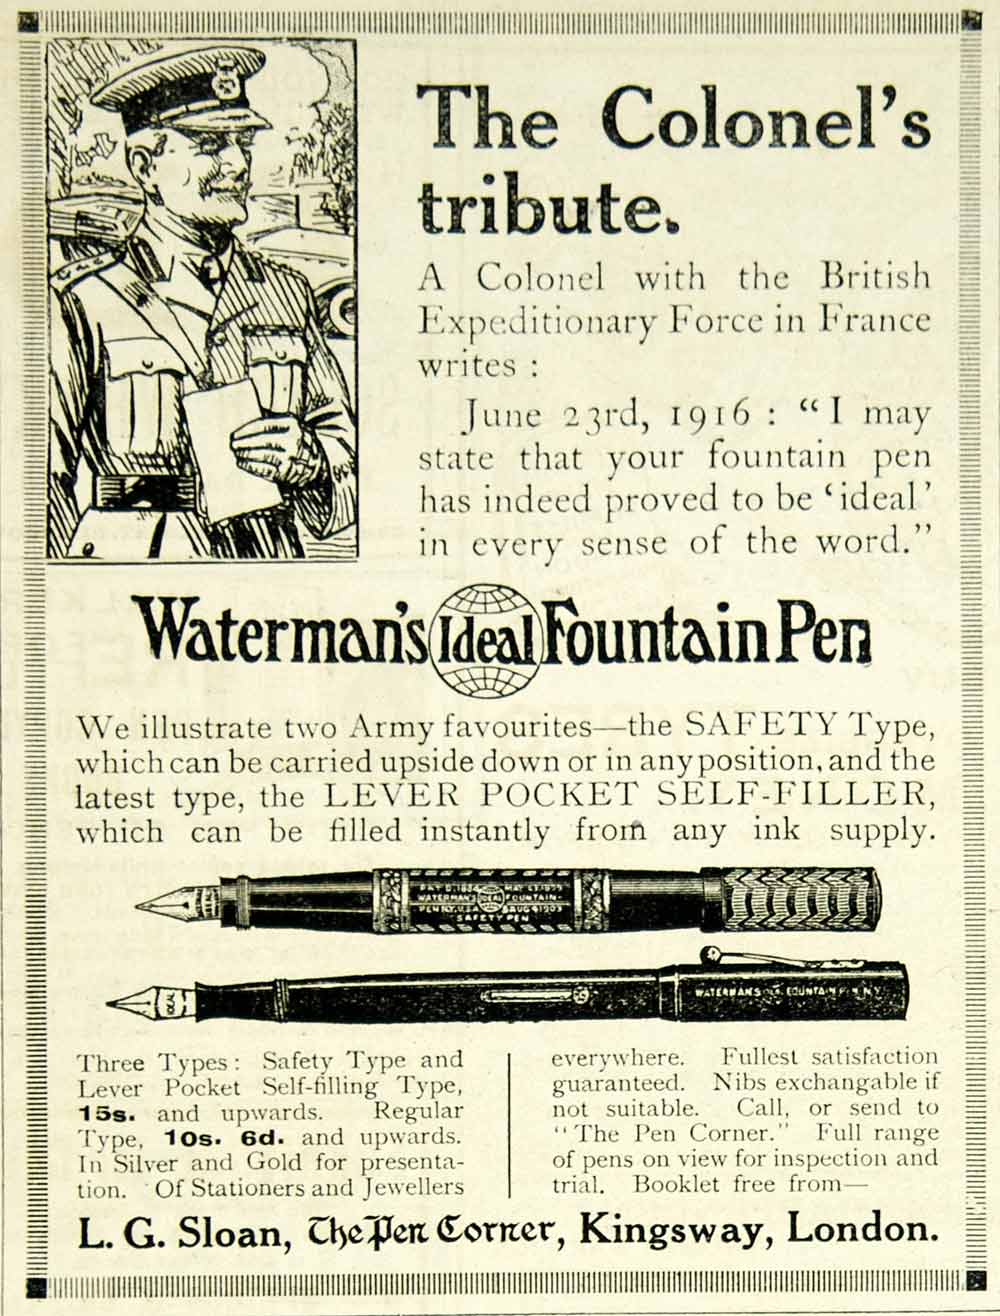 1916 Ad Vintage World War I Waterman's Ideal Fountain Pen British Colonel Advert